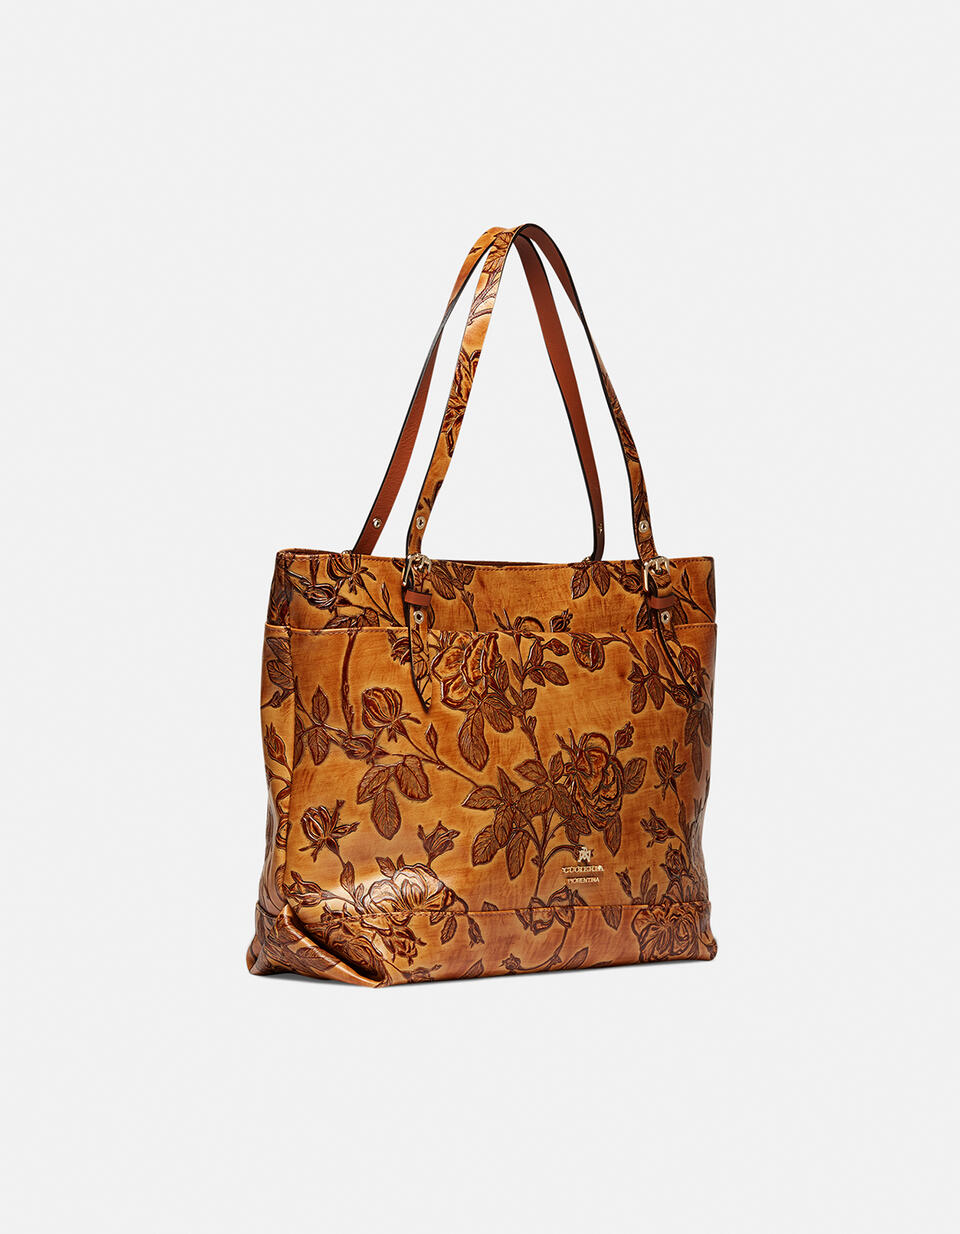 Big shopping bag keystone design - SHOPPING - WOMEN'S BAGS | bags  - SHOPPING - WOMEN'S BAGS | bagsCuoieria Fiorentina